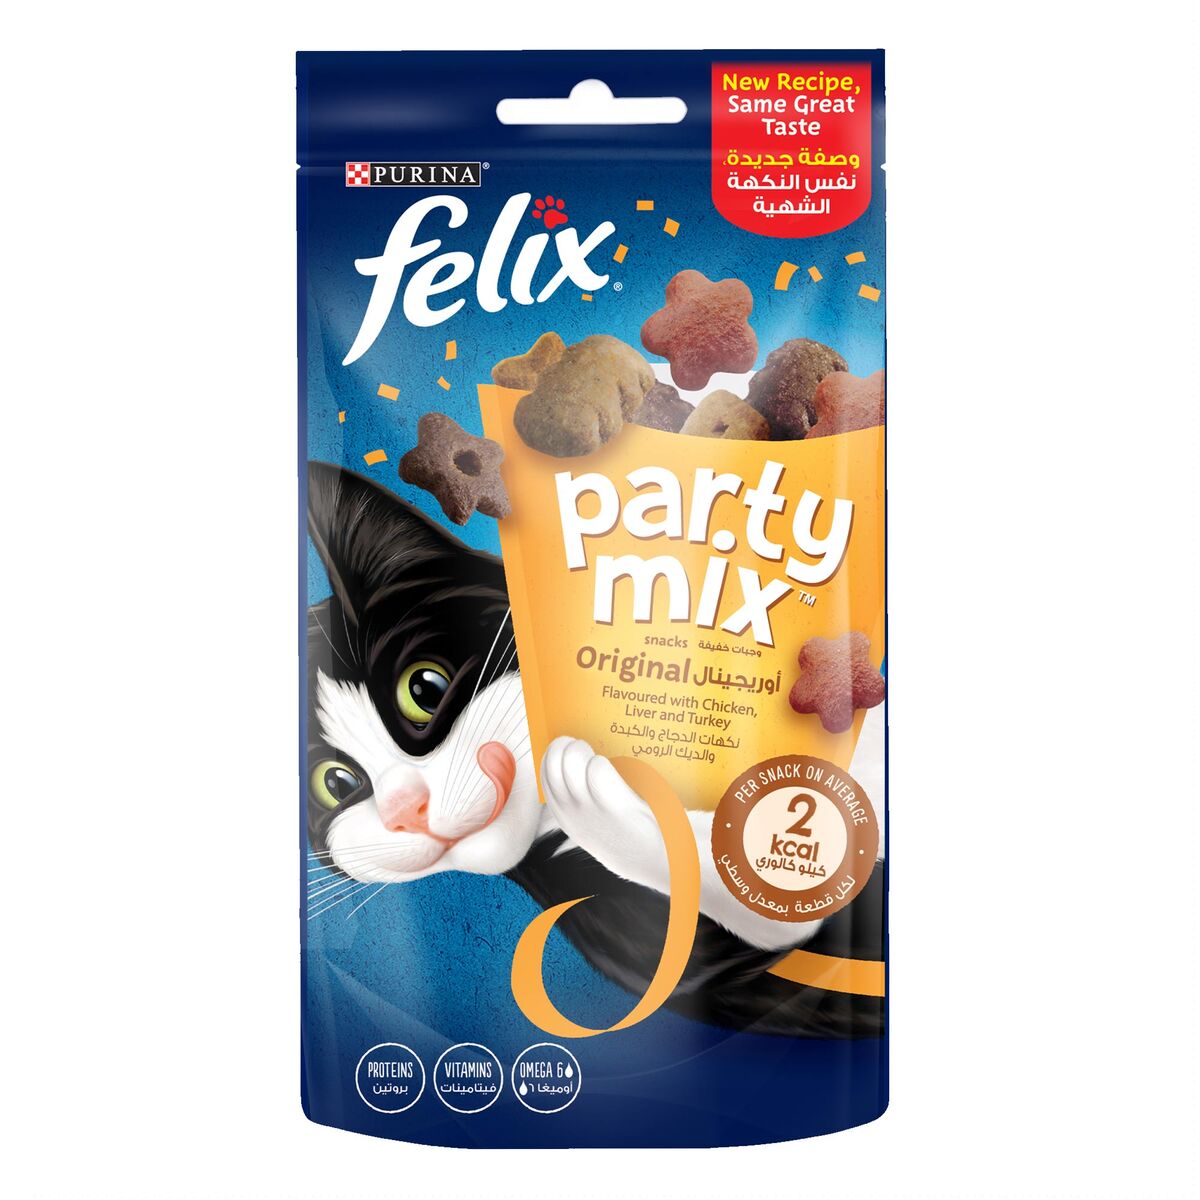 Purina Felix Party Mix Original Mix 60 g